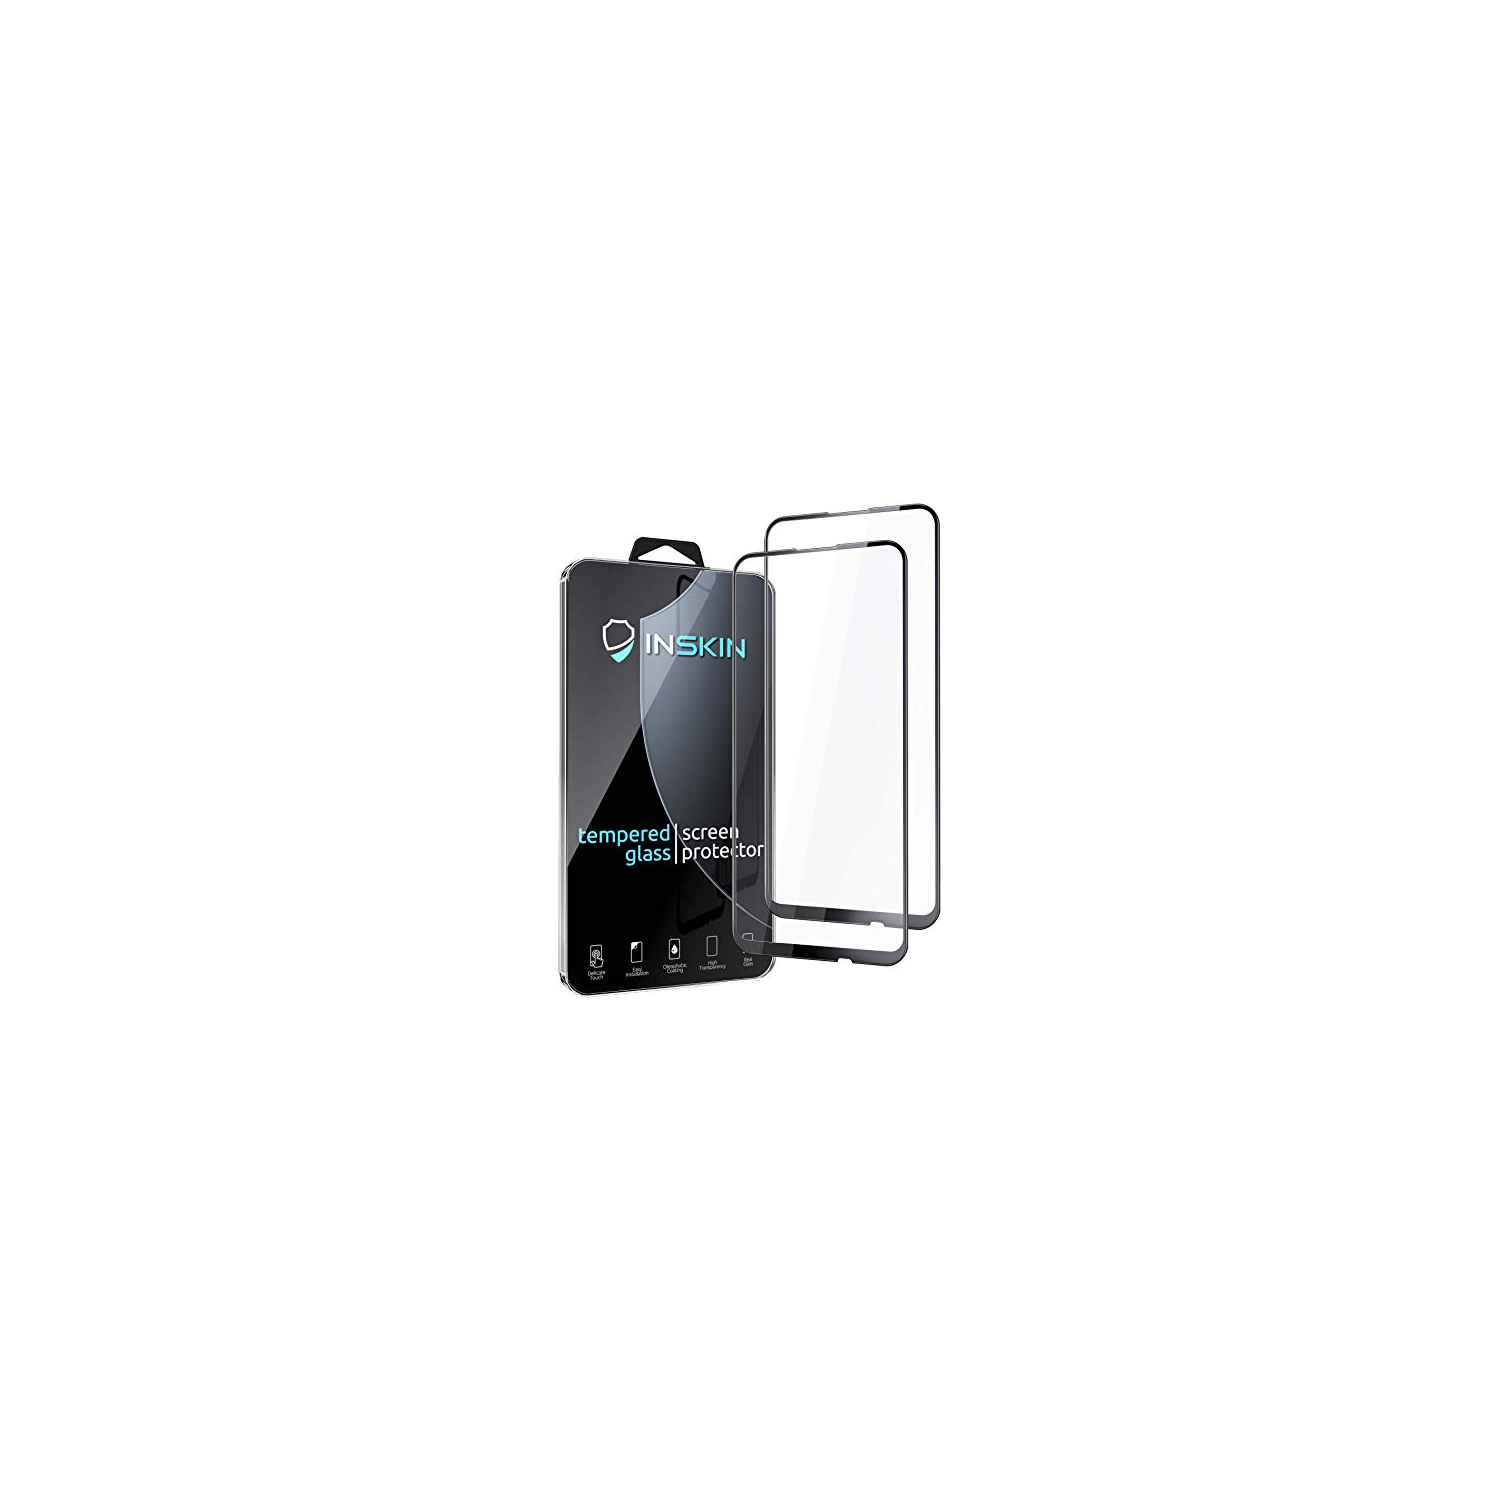 Inskin 2.5D Full Coverage Full Glue Tempered Glass Screen Protector, fits Huawei P40 Lite E 6.39 inch [2020]. 2-Pack.